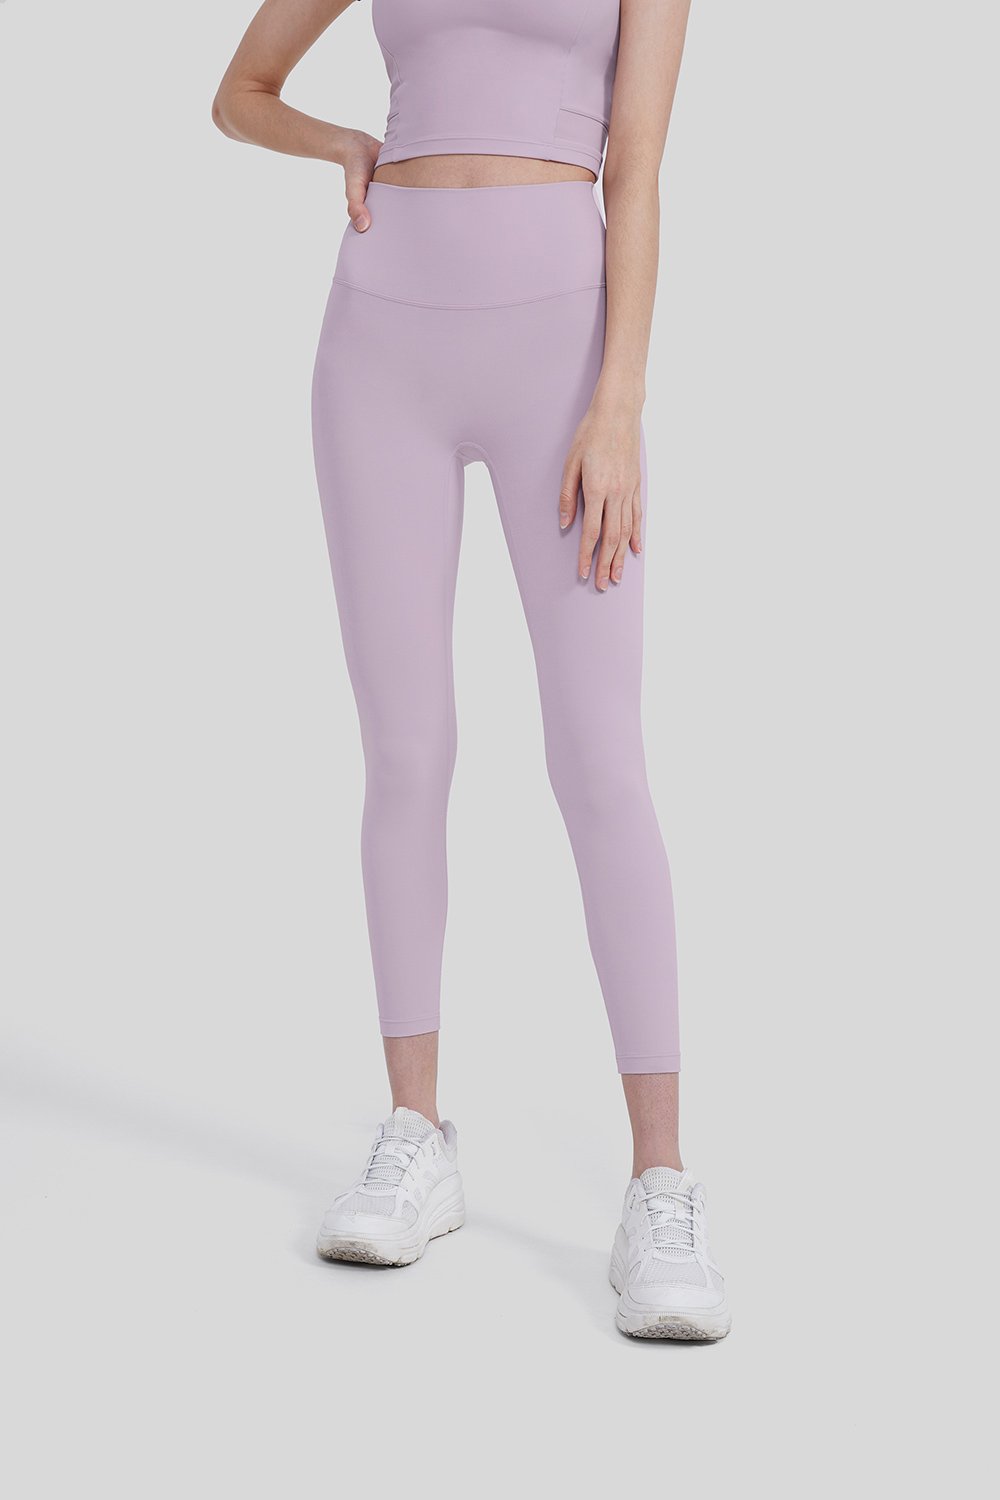 AL79 Eation Custom Solid Color Yoga Pants Woman High Waist Elastic Gym Sport Dry fit Workout Running Squat Proof Fitness Leggings